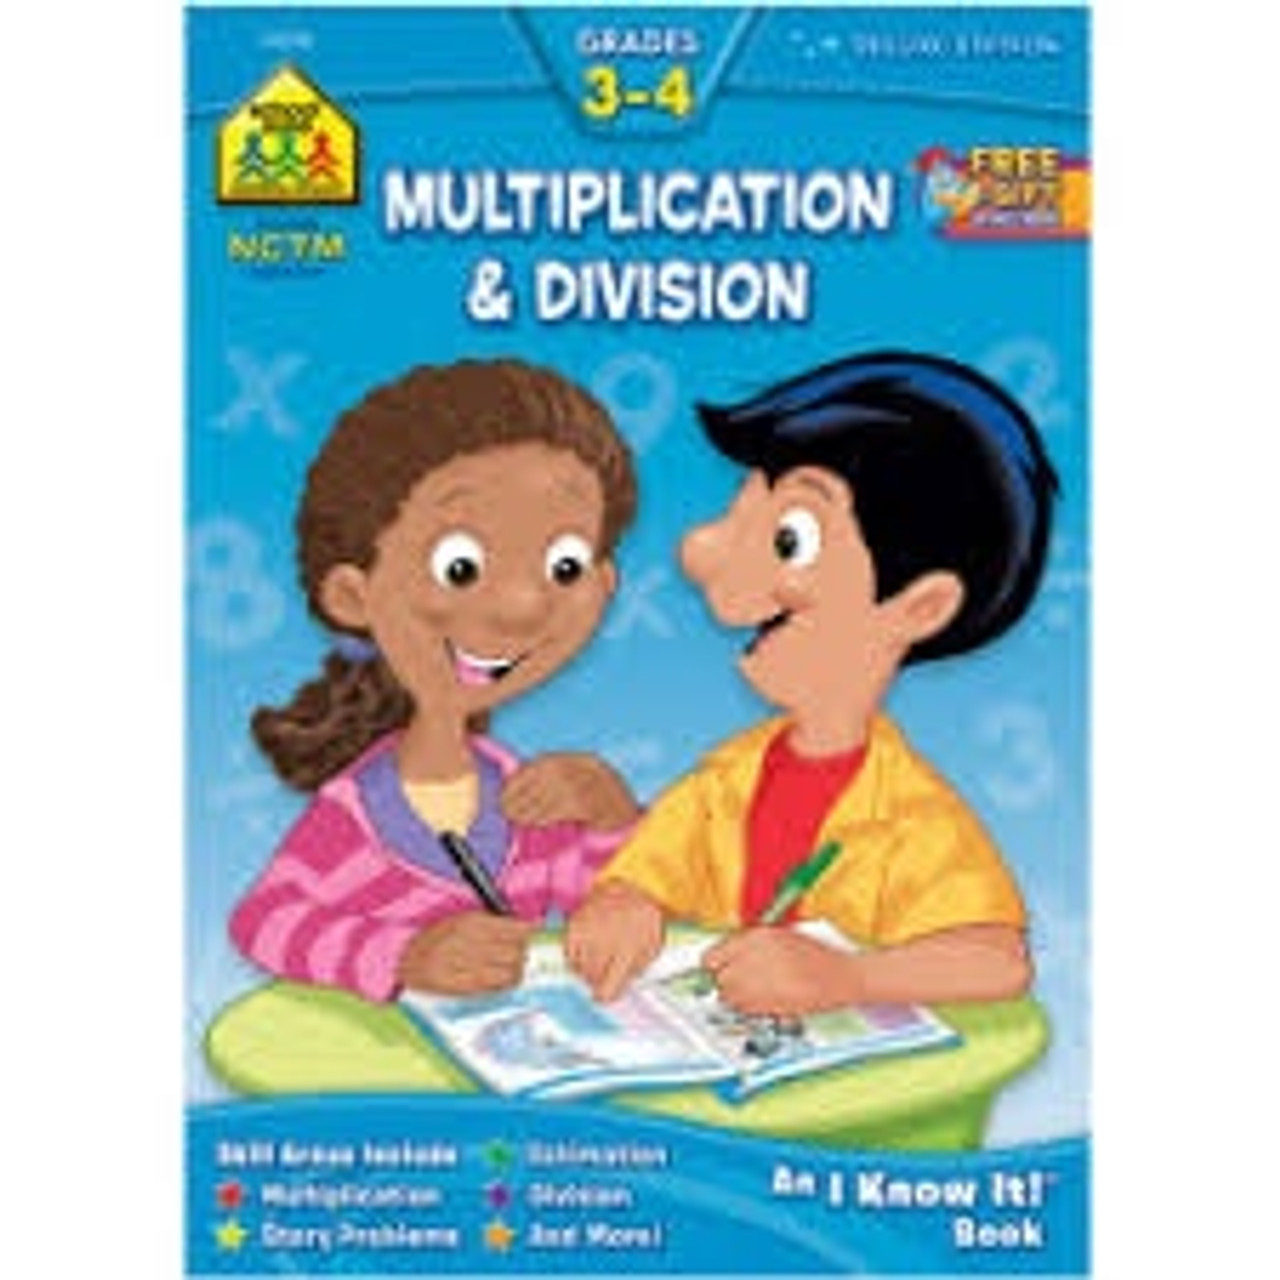 MULTIPLICATION & DIVISION 3-4